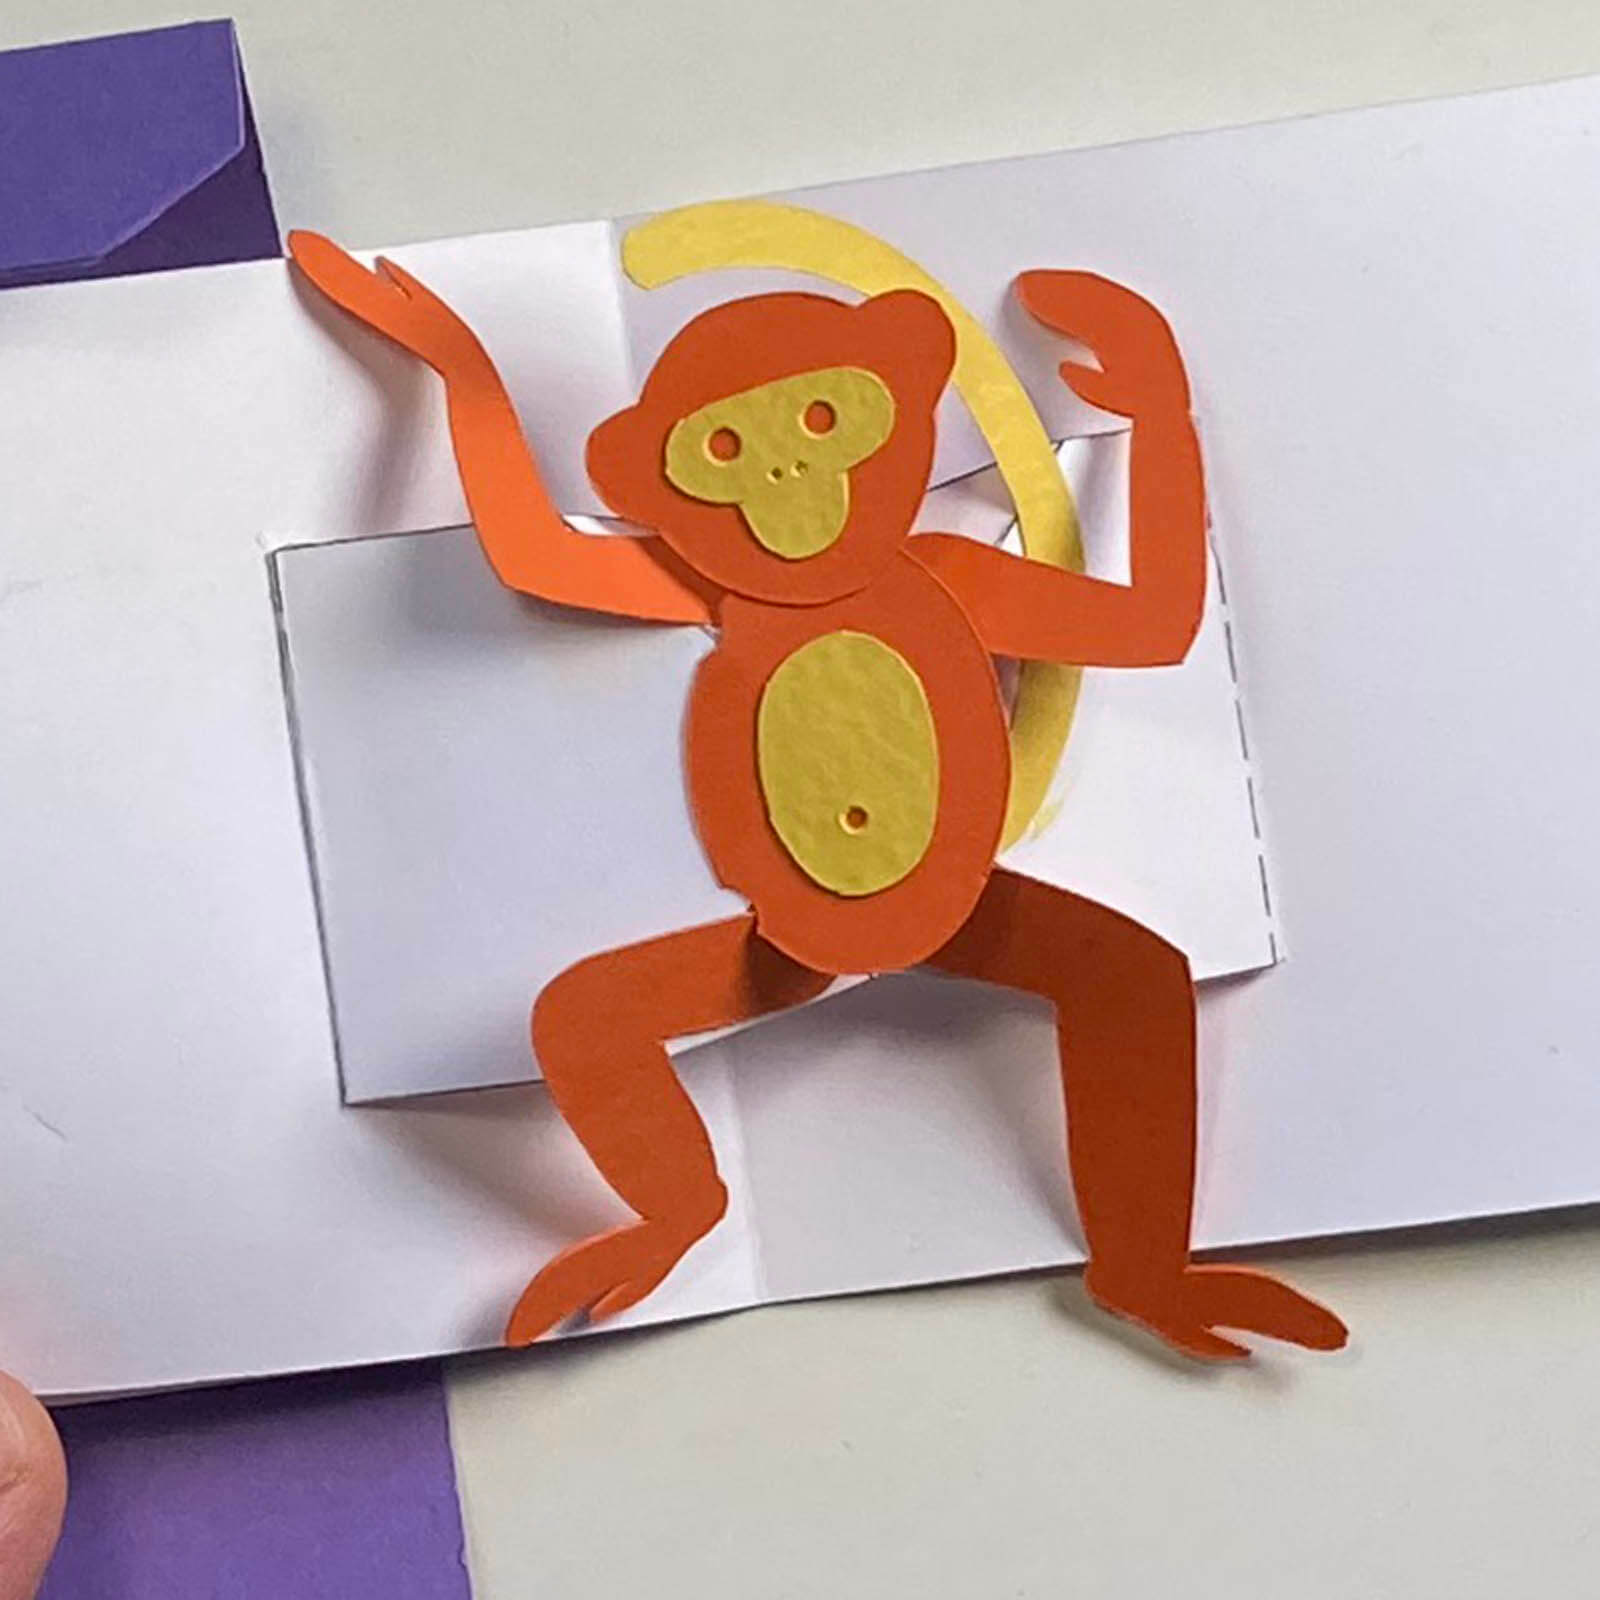 Monkey pop-up book design - by Shawn Sheehy